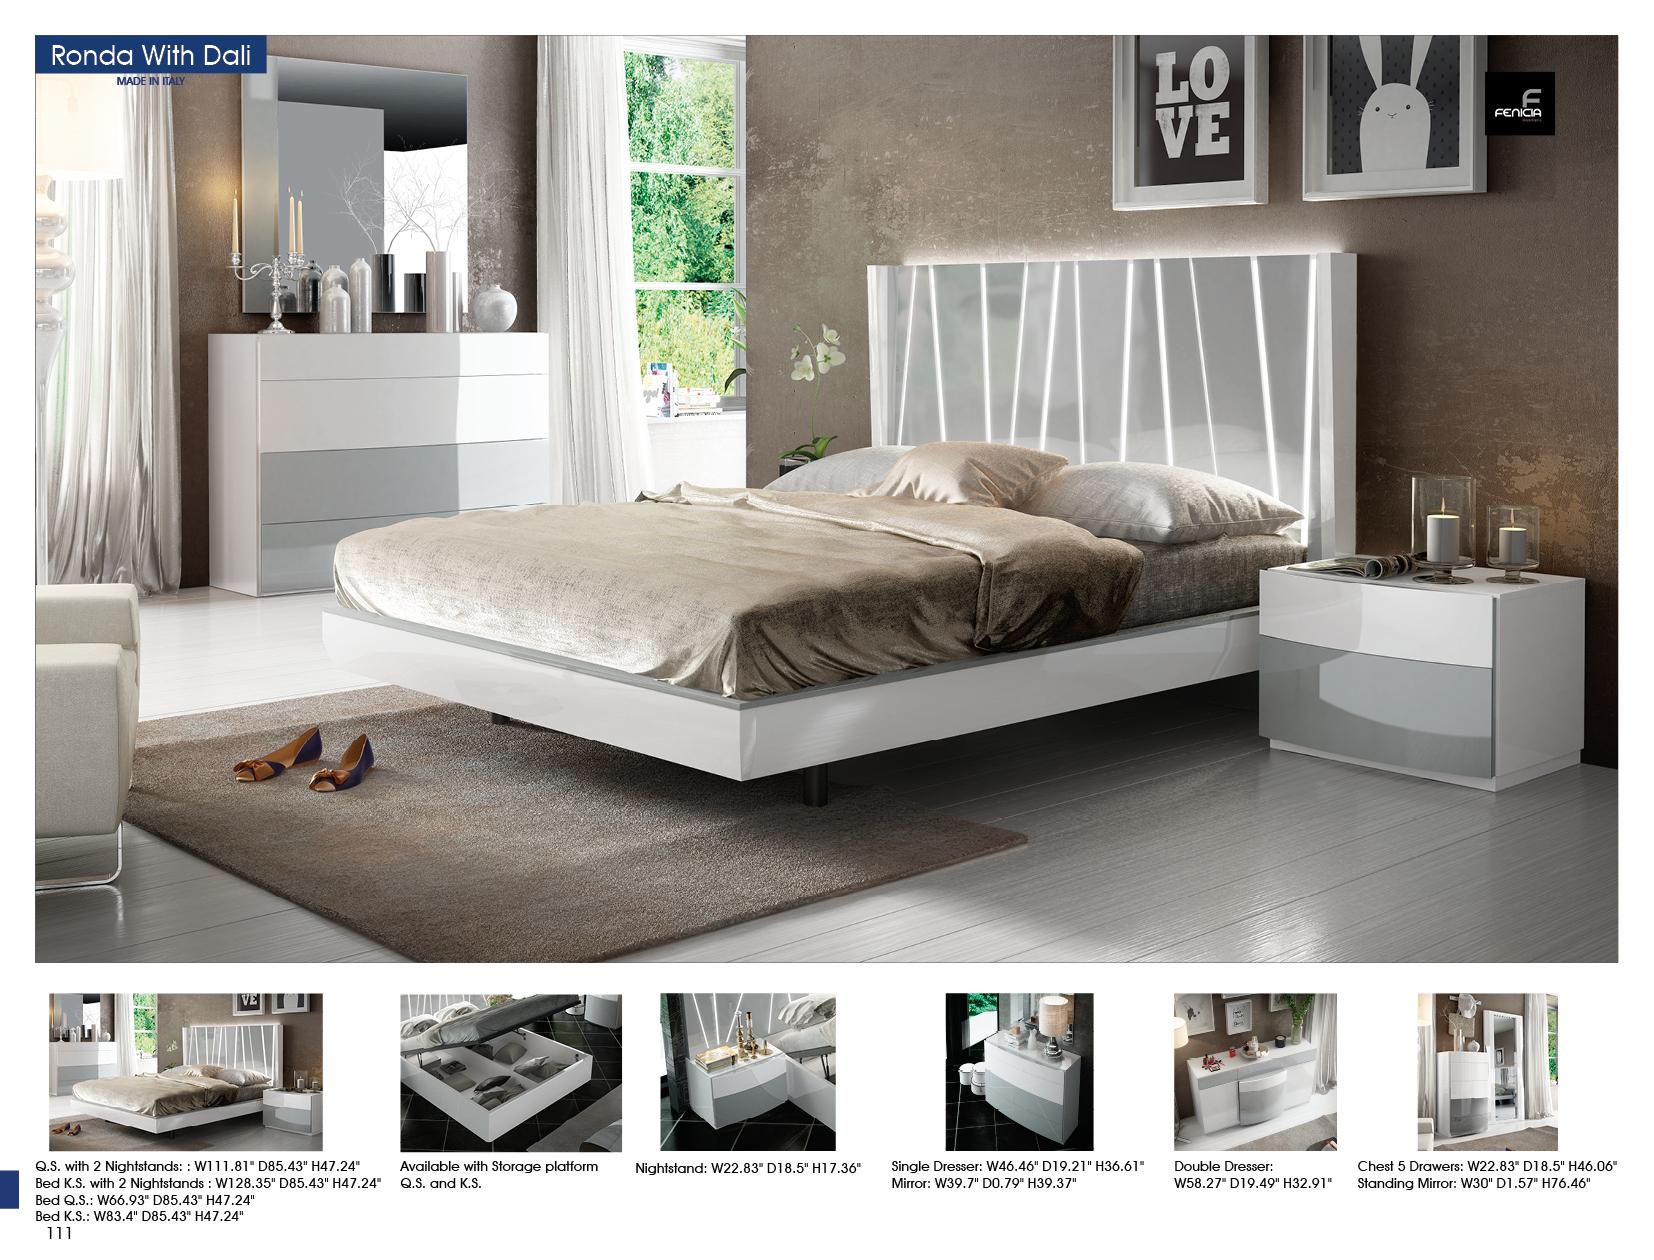 

    
Ronda DALI Platform Bedroom Set
